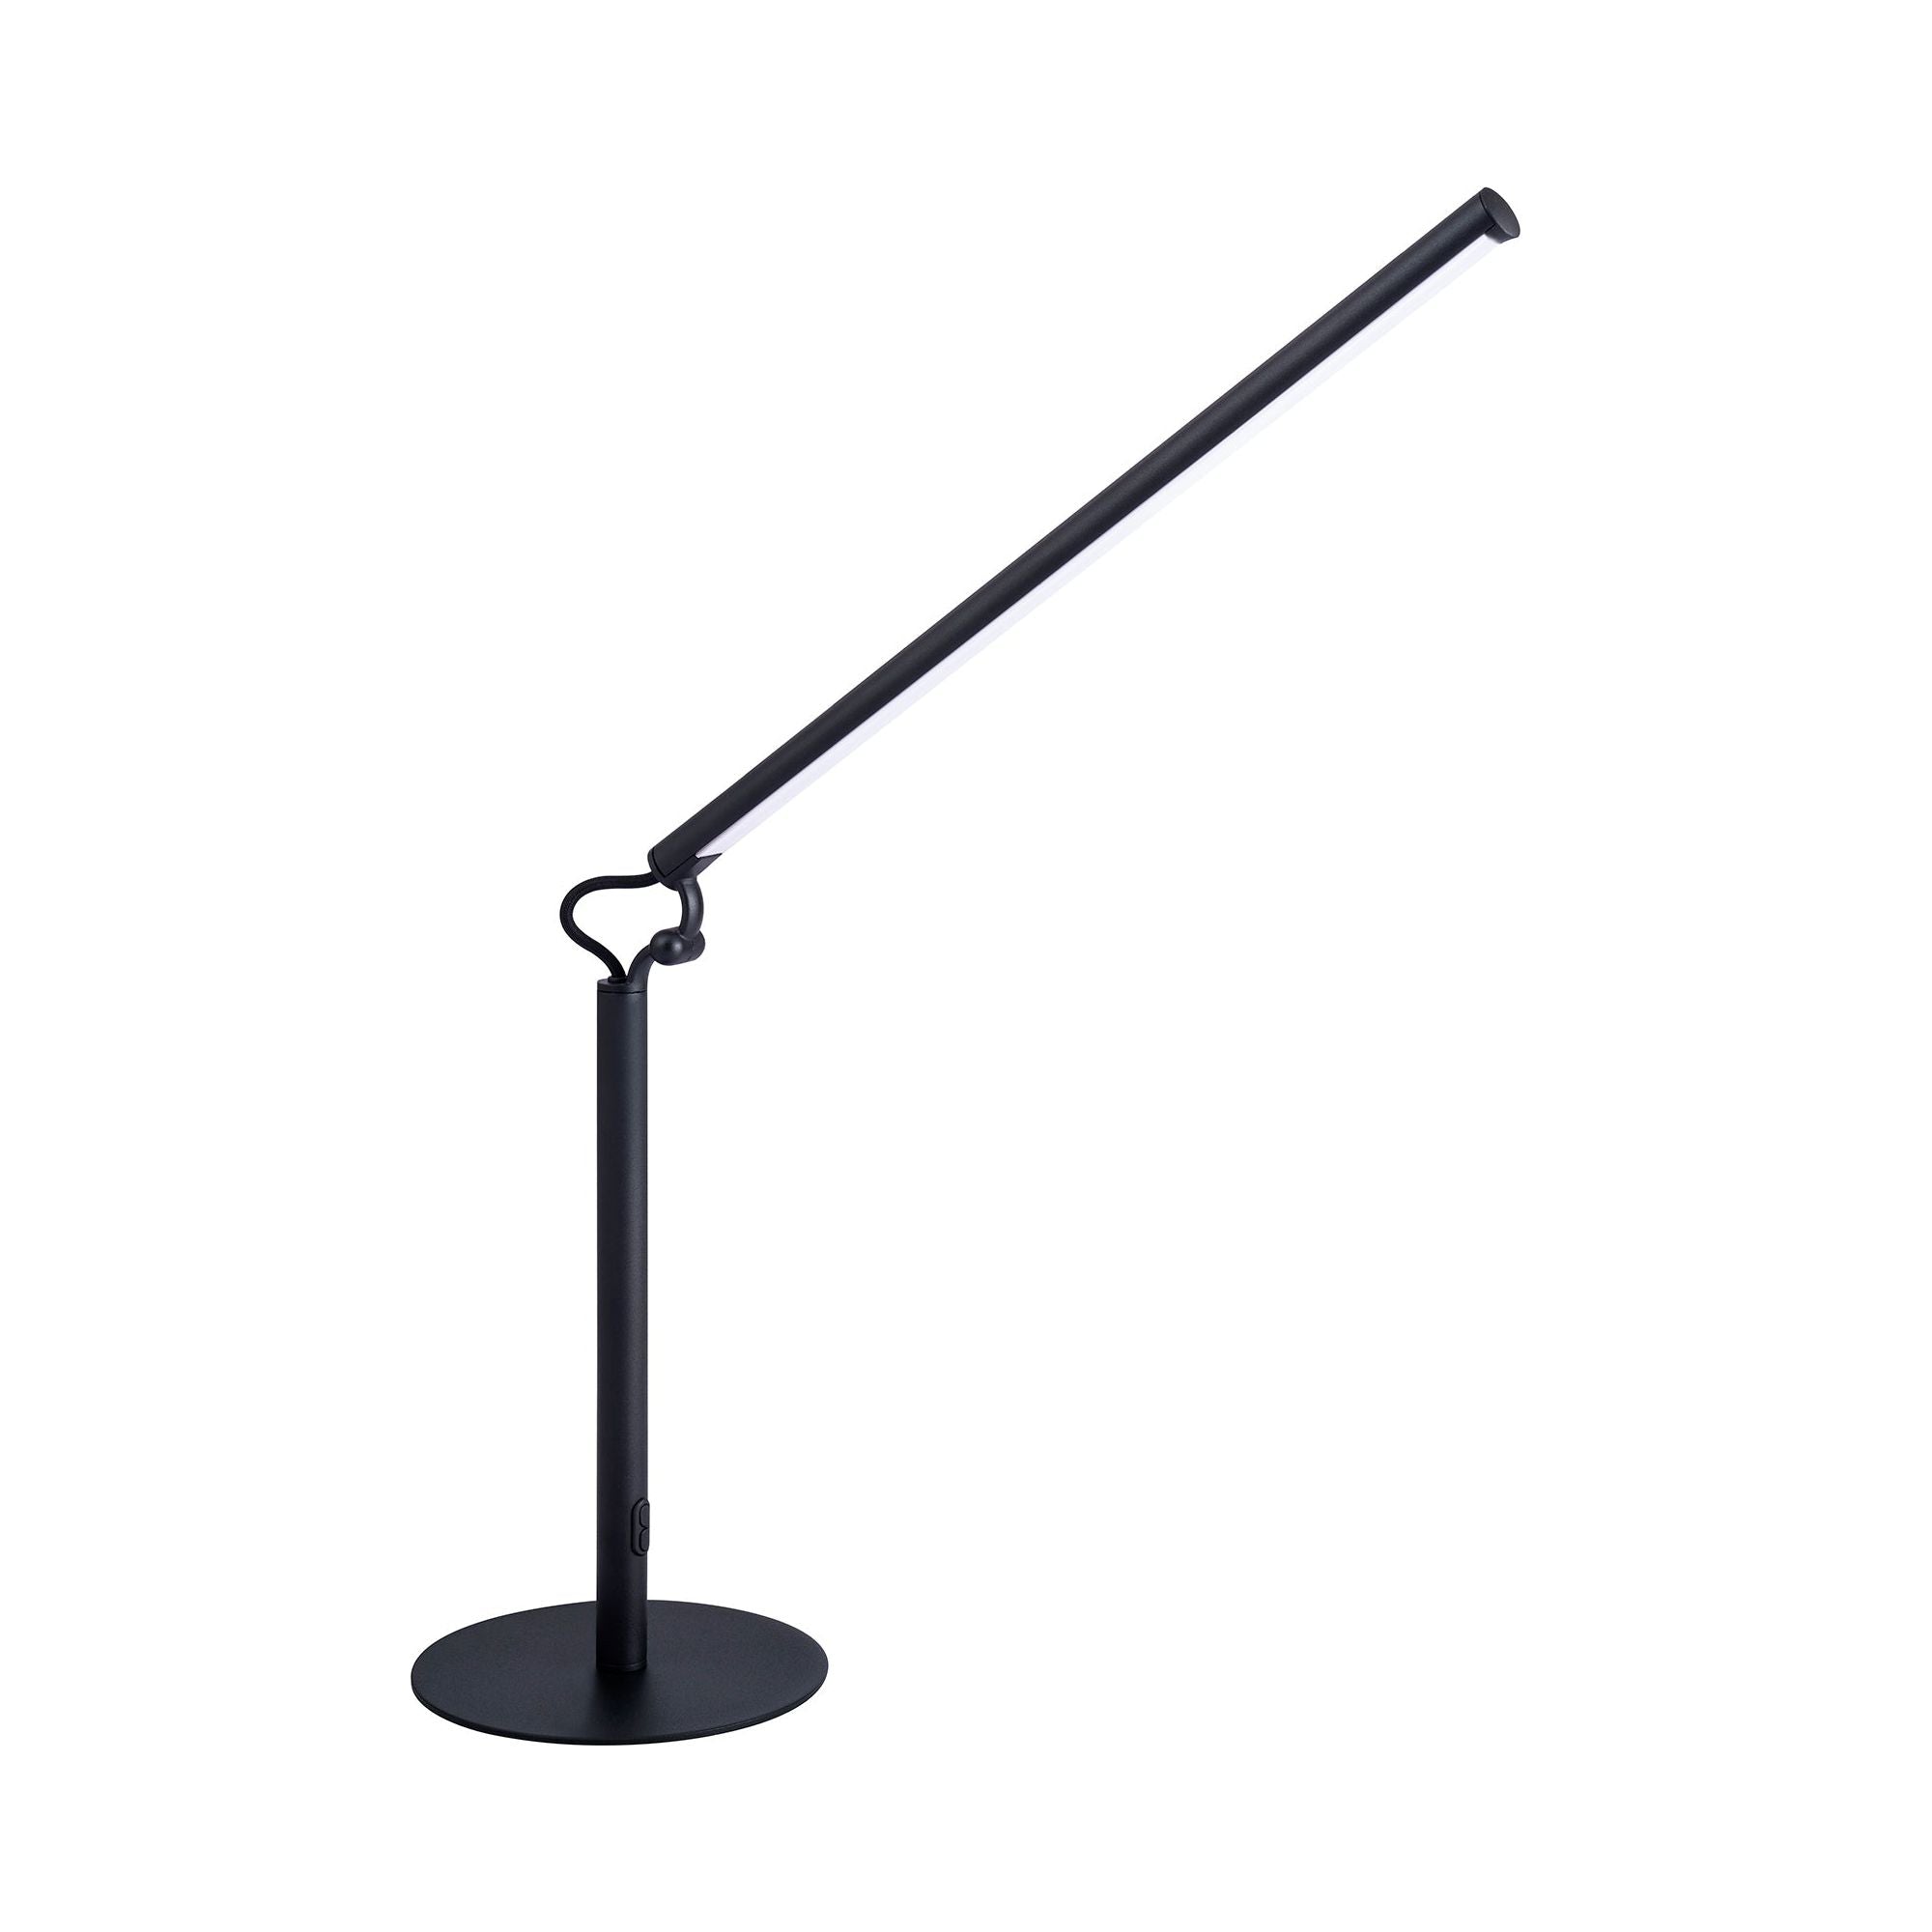 Zuon Desk Lamp